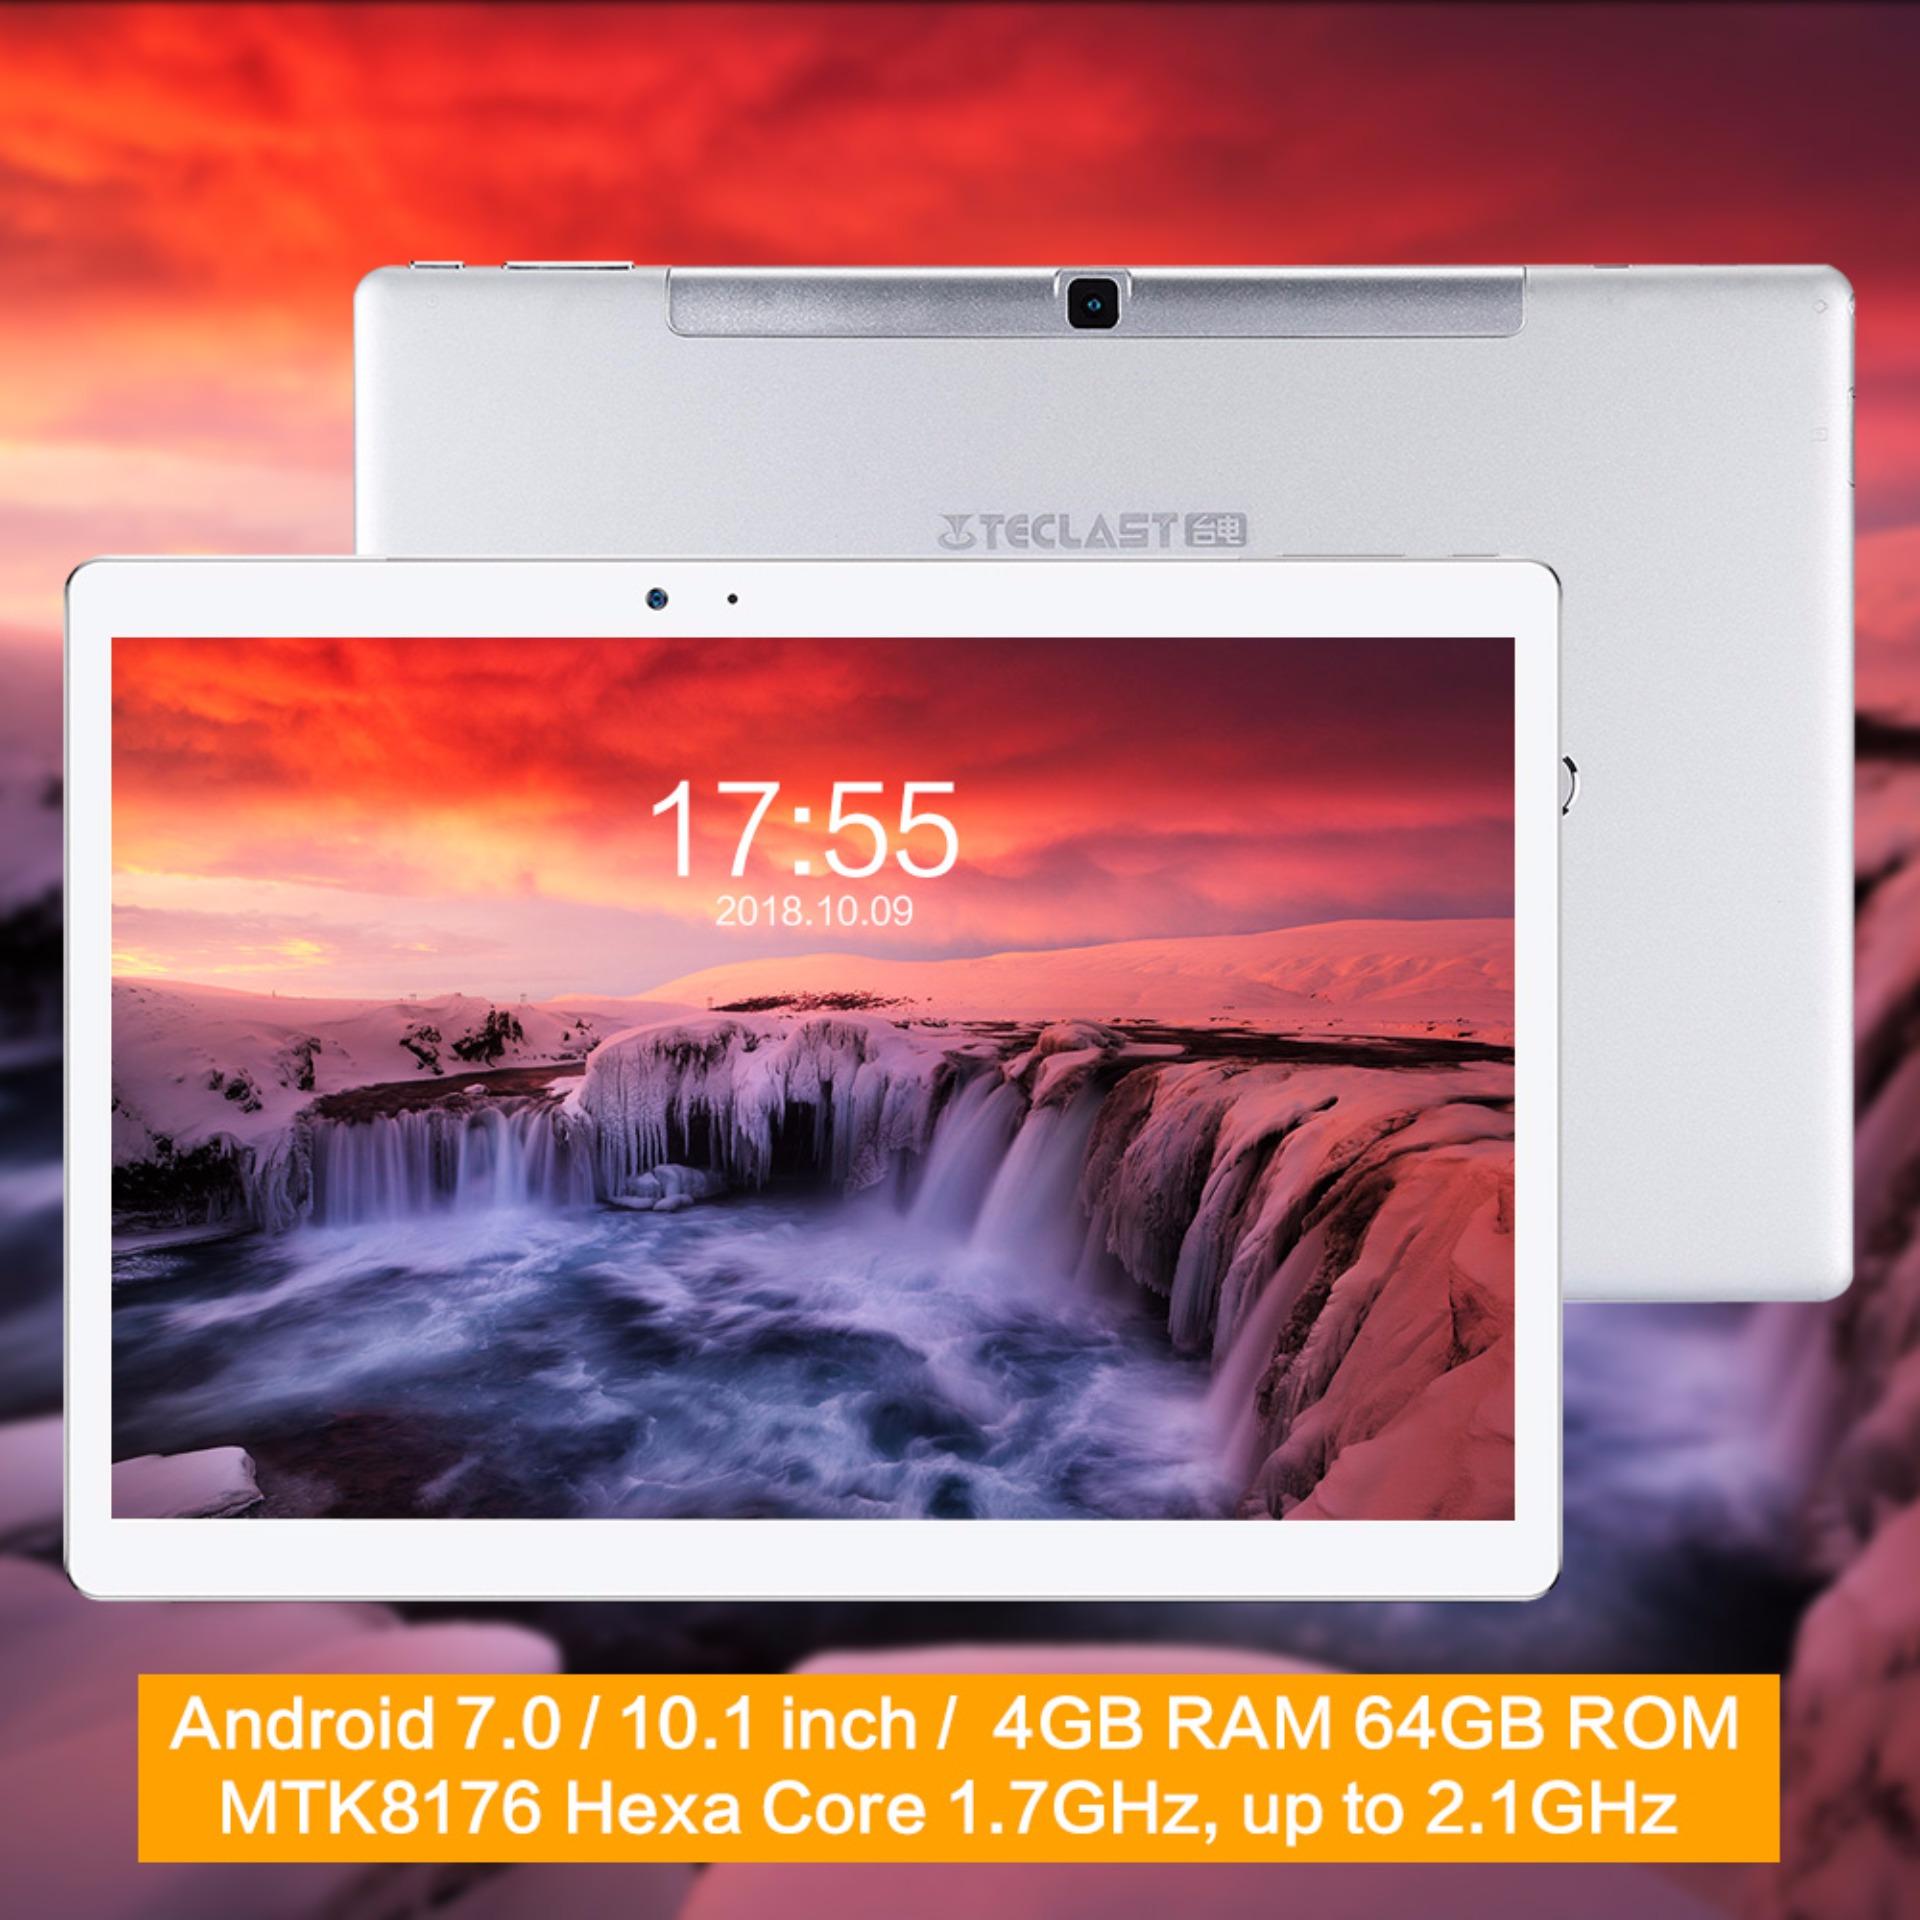 Teclast Master T10 10.1 inch Tablet PC Android 7.0 MTK8176 Hexa Core 1.7GHz 4GB RAM 64GB ROM Fingerprint Sensor Dual WiFi OTG Cameras